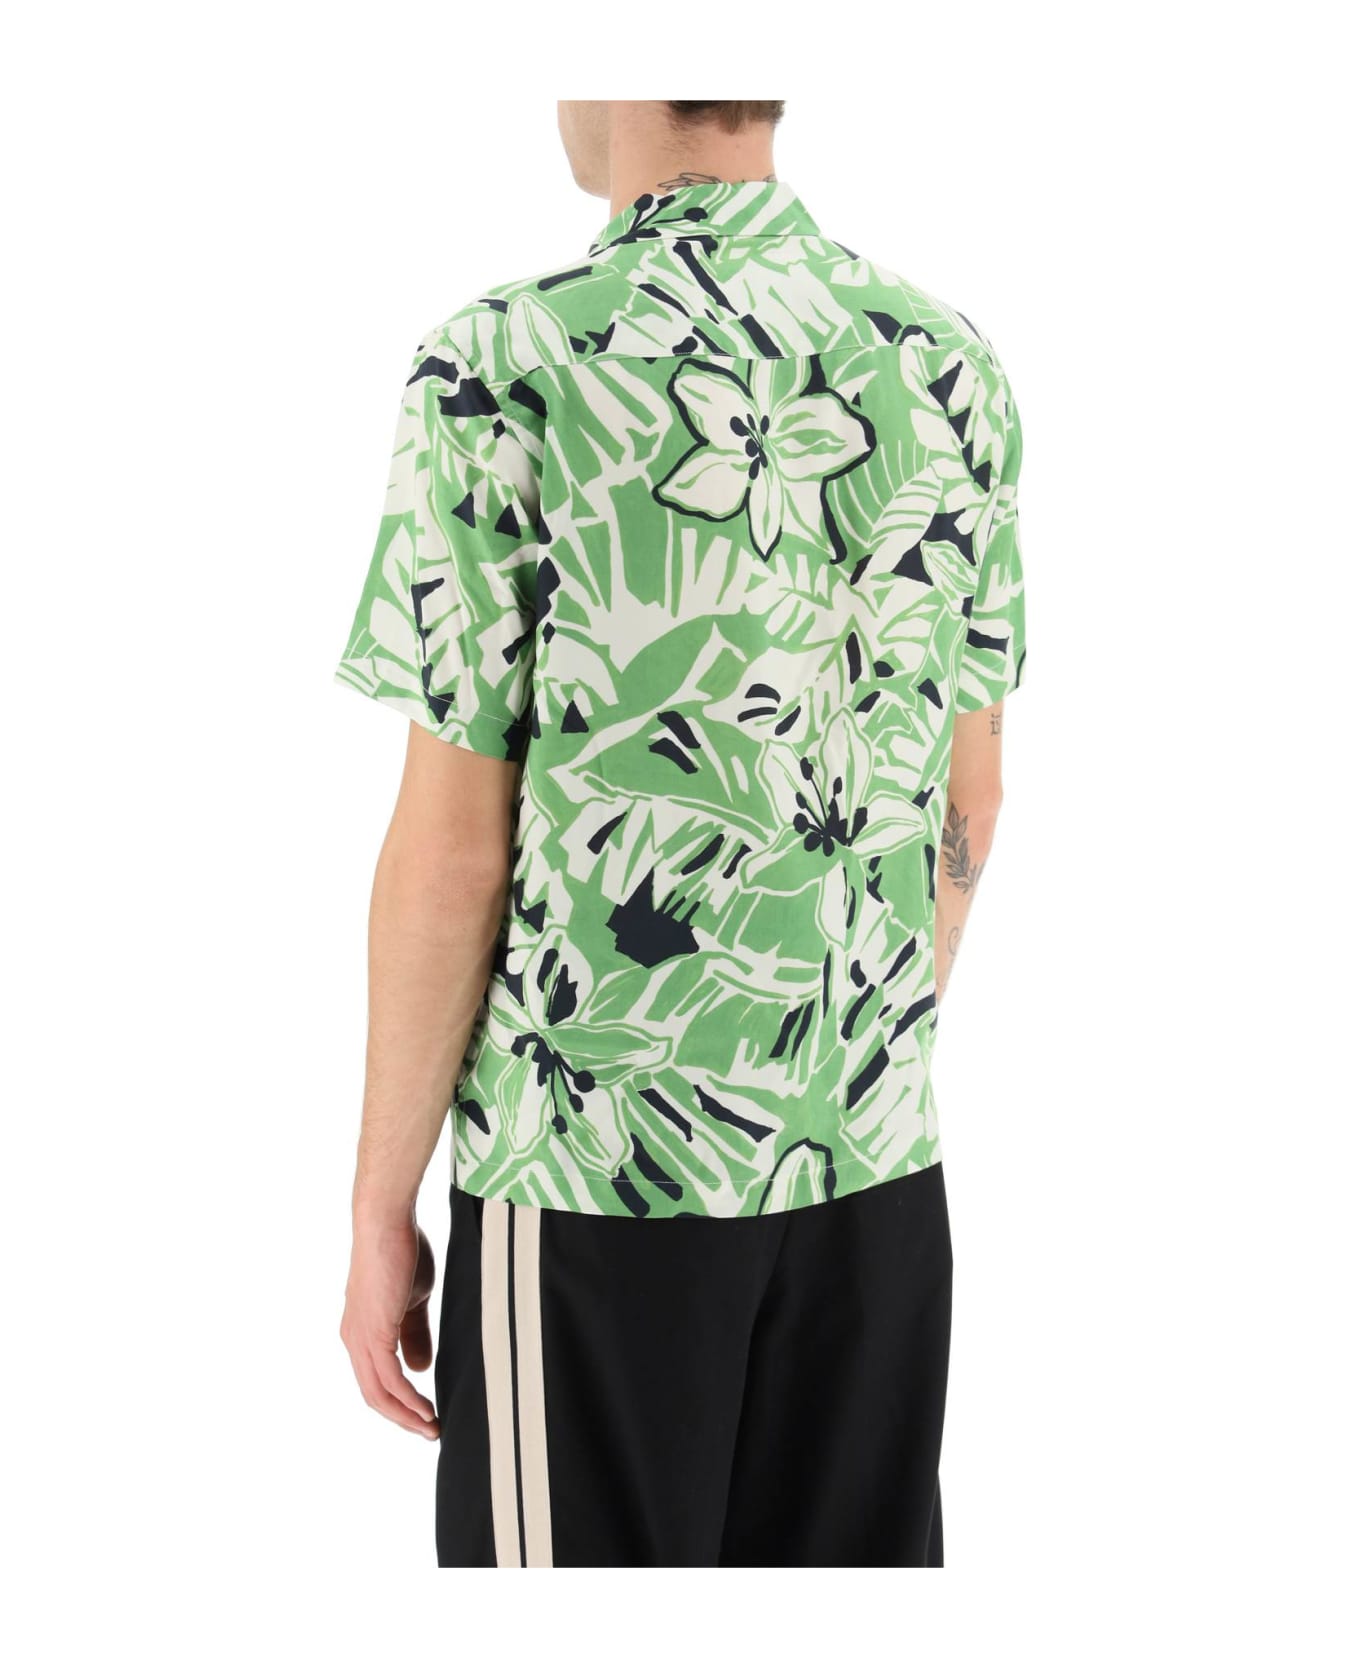 Palm Angels Macro Hibiscus Bowling Shirt - GREEN WHITE (Green)